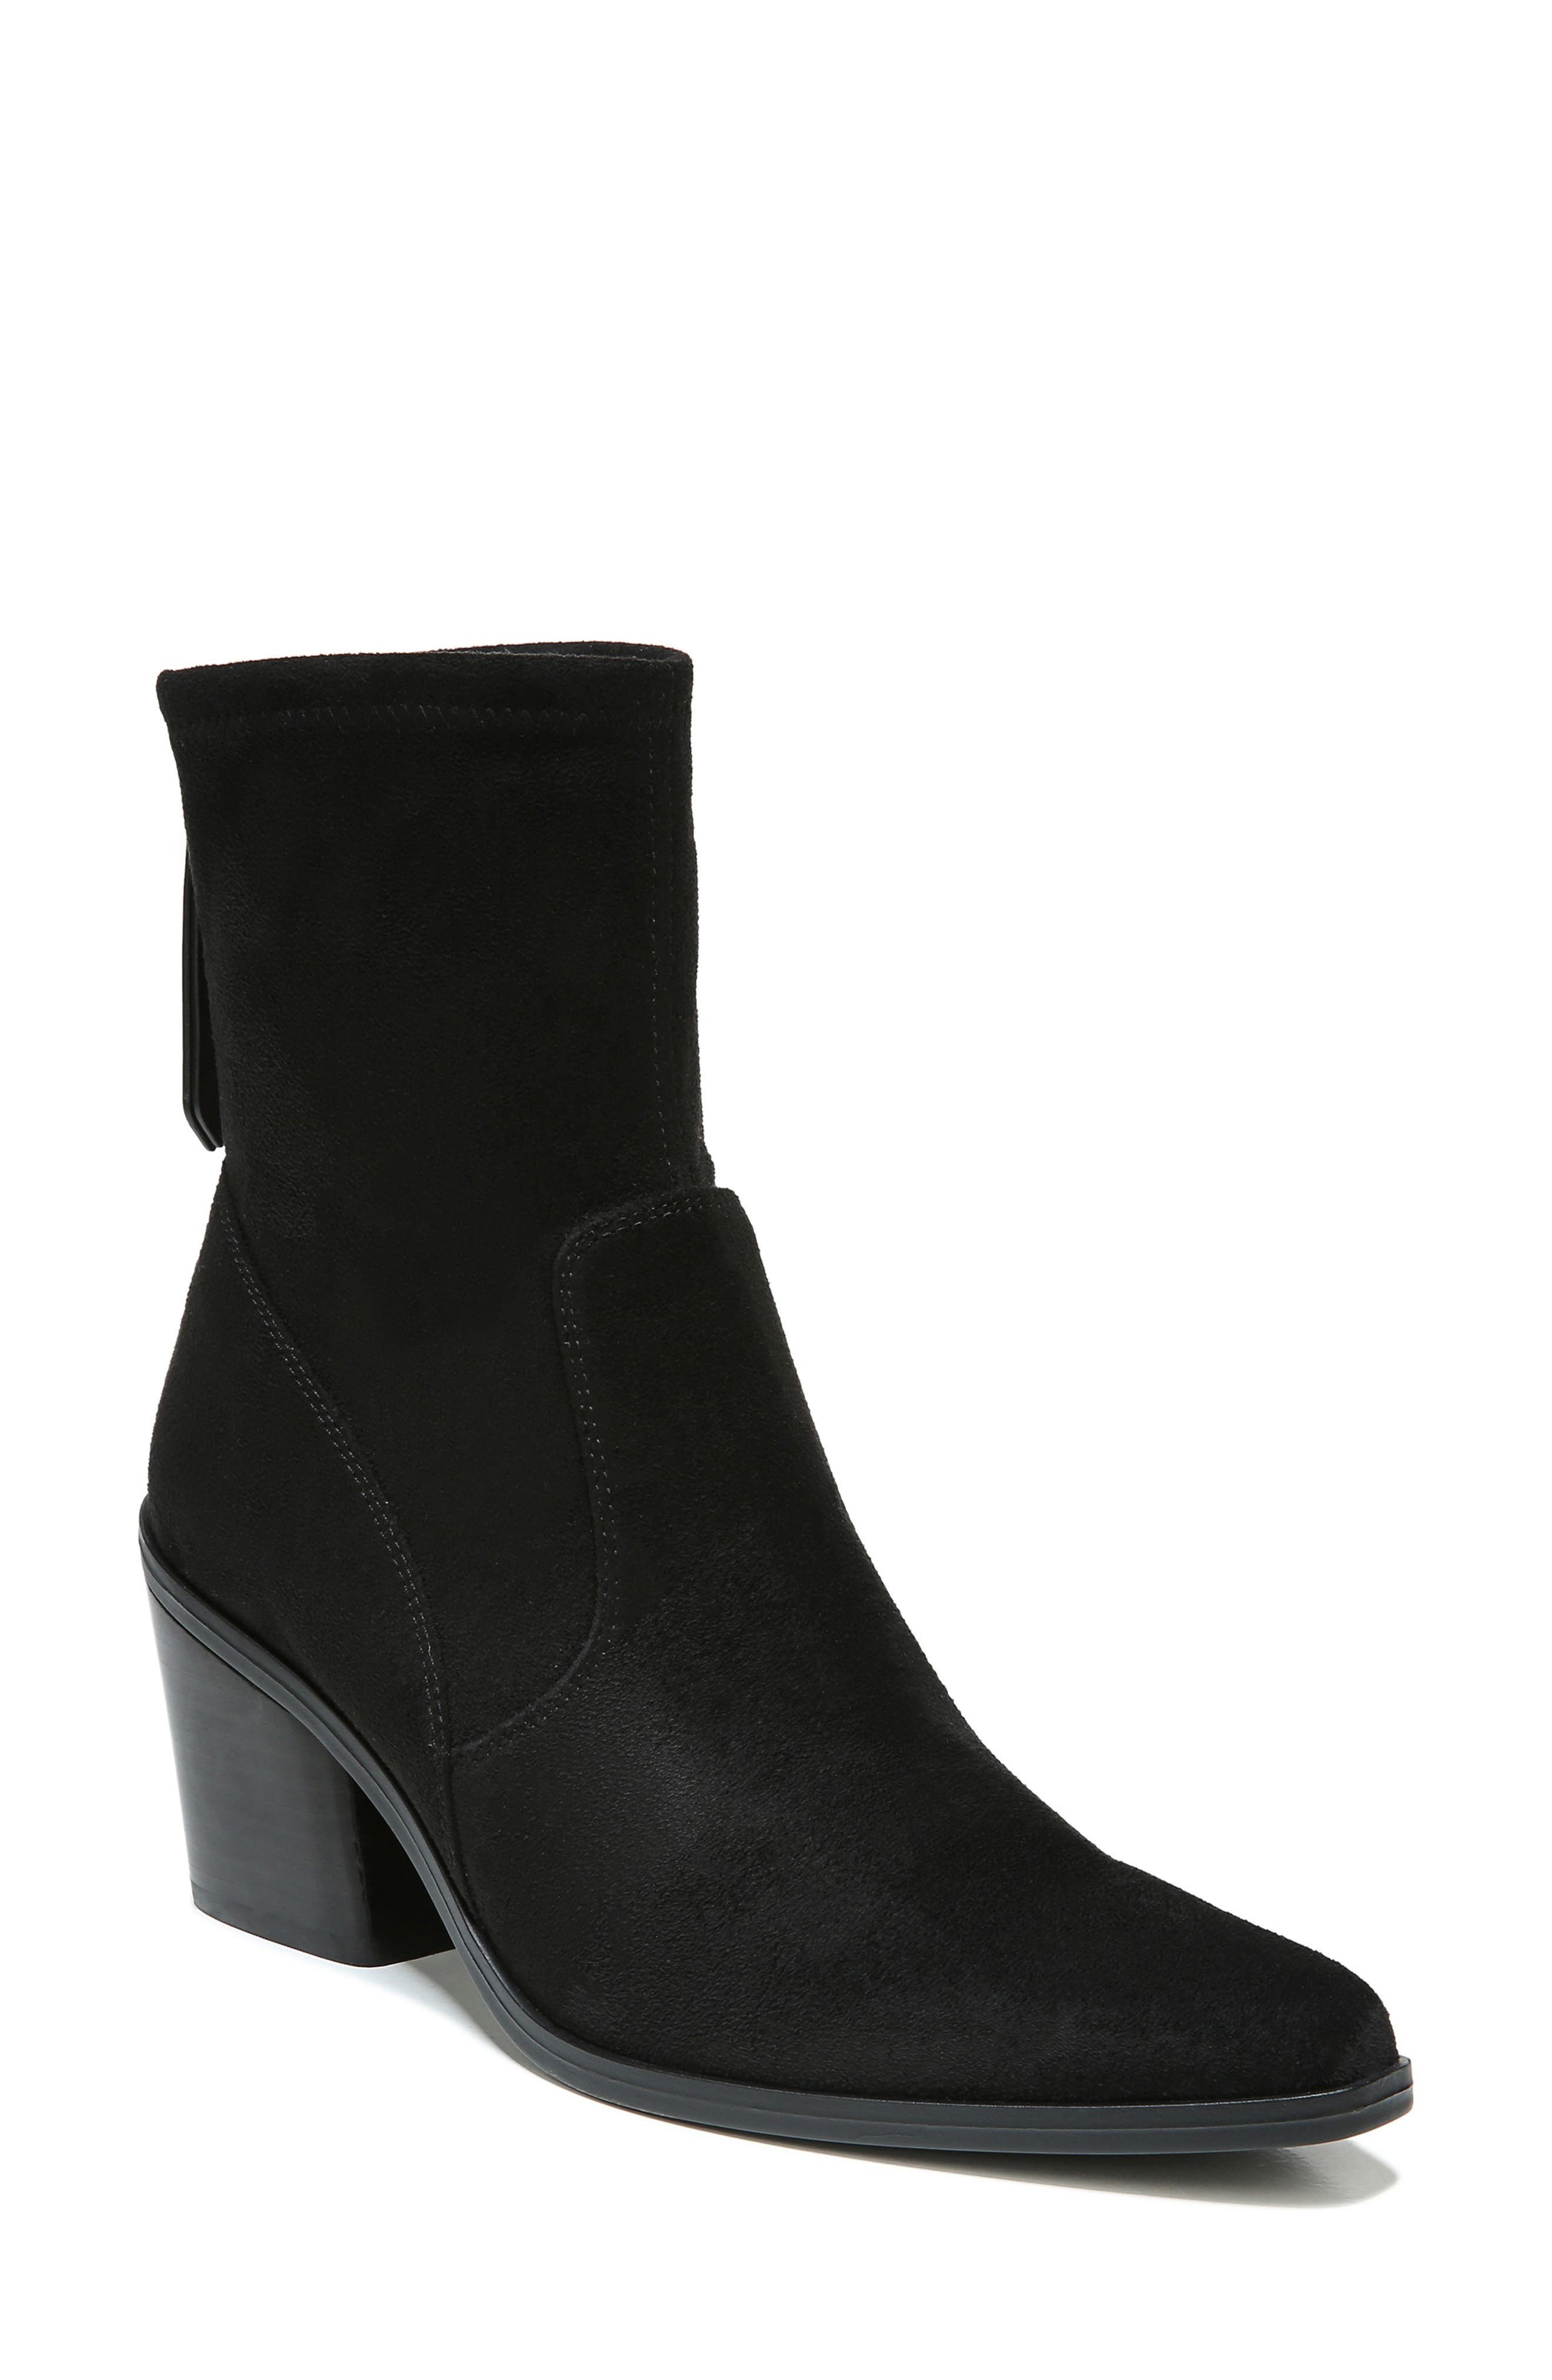 black suede pixie boots